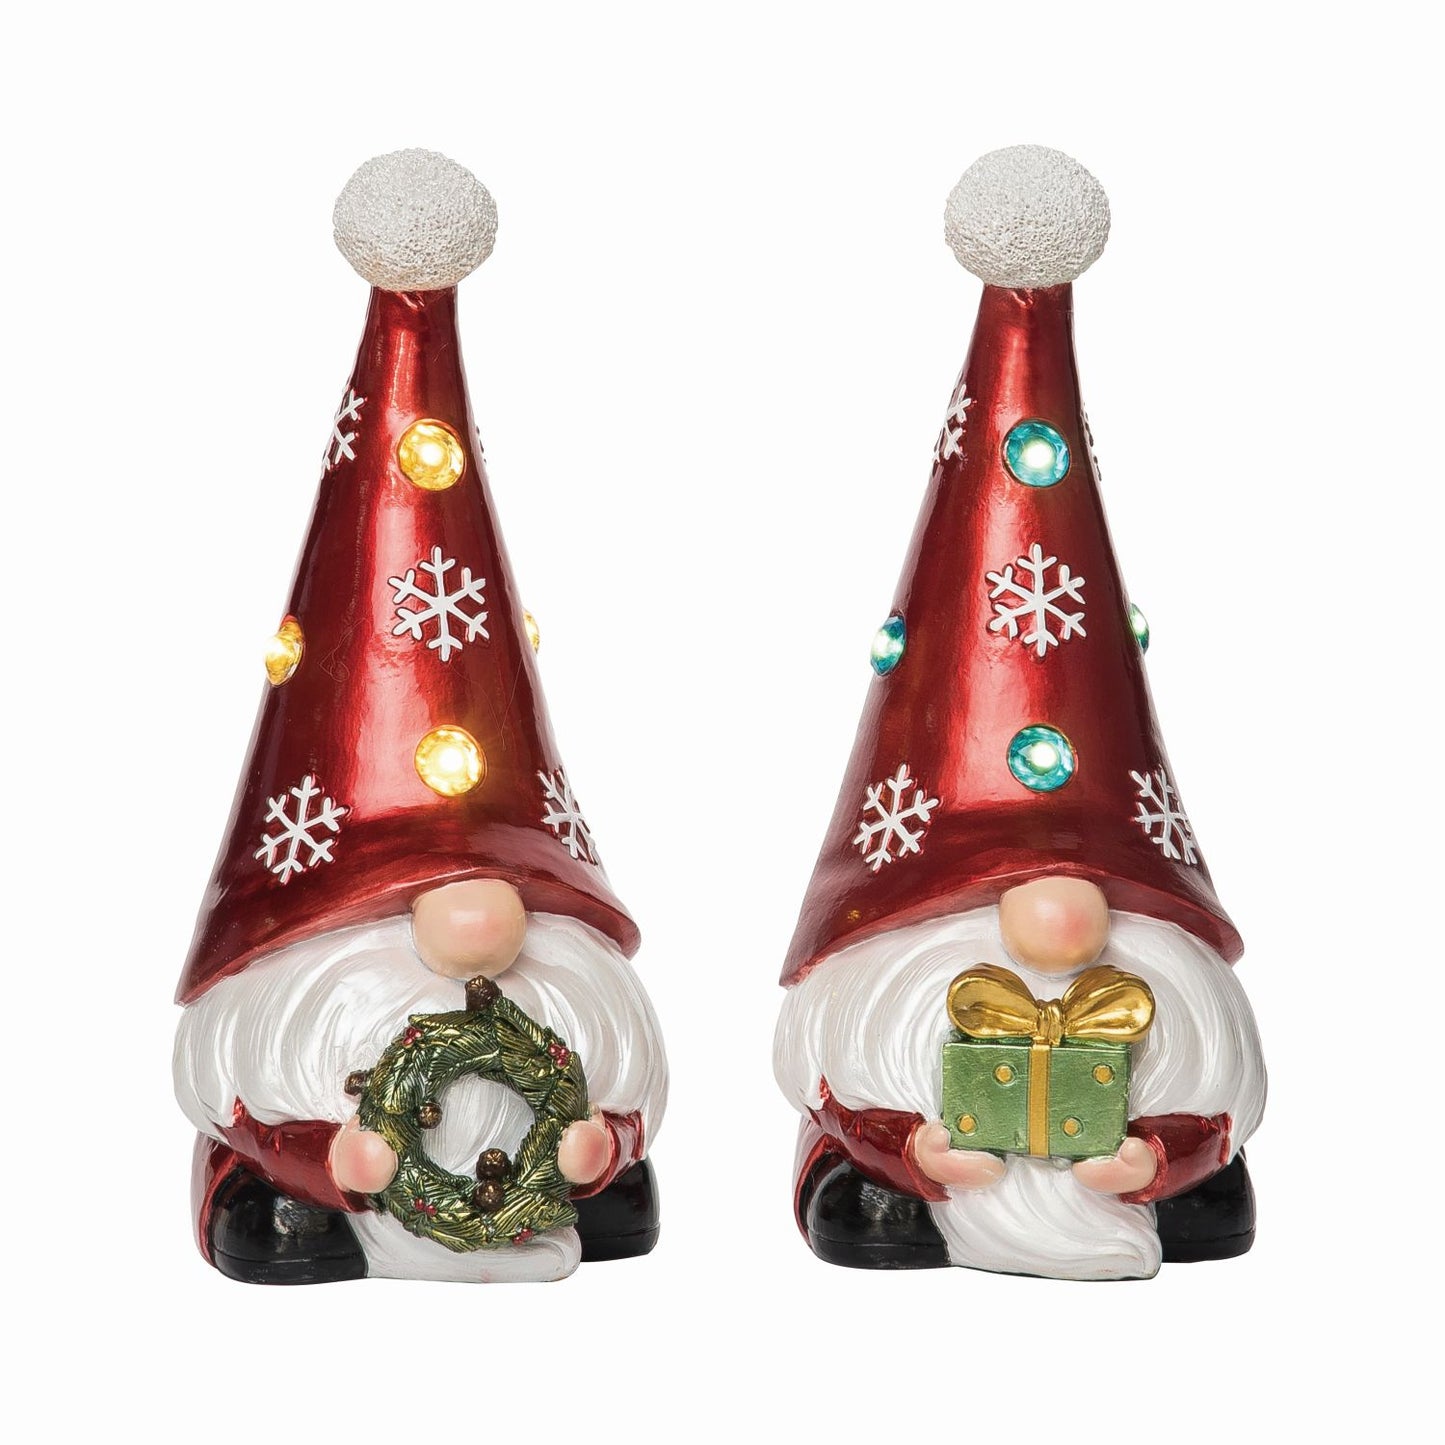 Transpac Resin Light Up Snowflake Gnome Decor, Set Of 2, Assortment